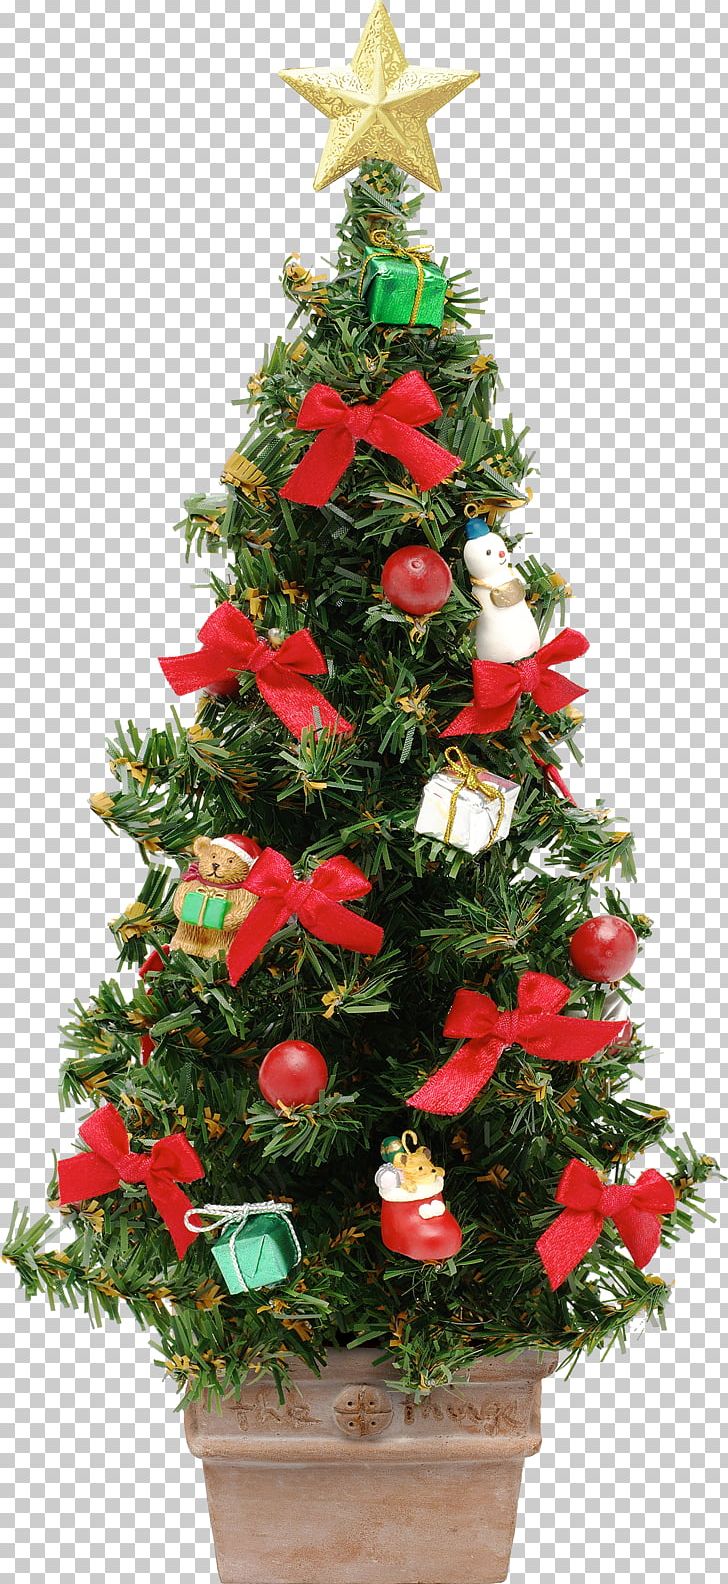 Christmas Decoration New Year Tree Christmas Tree PNG, Clipart, Bombka, Christmas, Christmas Decoration, Christmas Ornament, Christmas Tree Free PNG Download